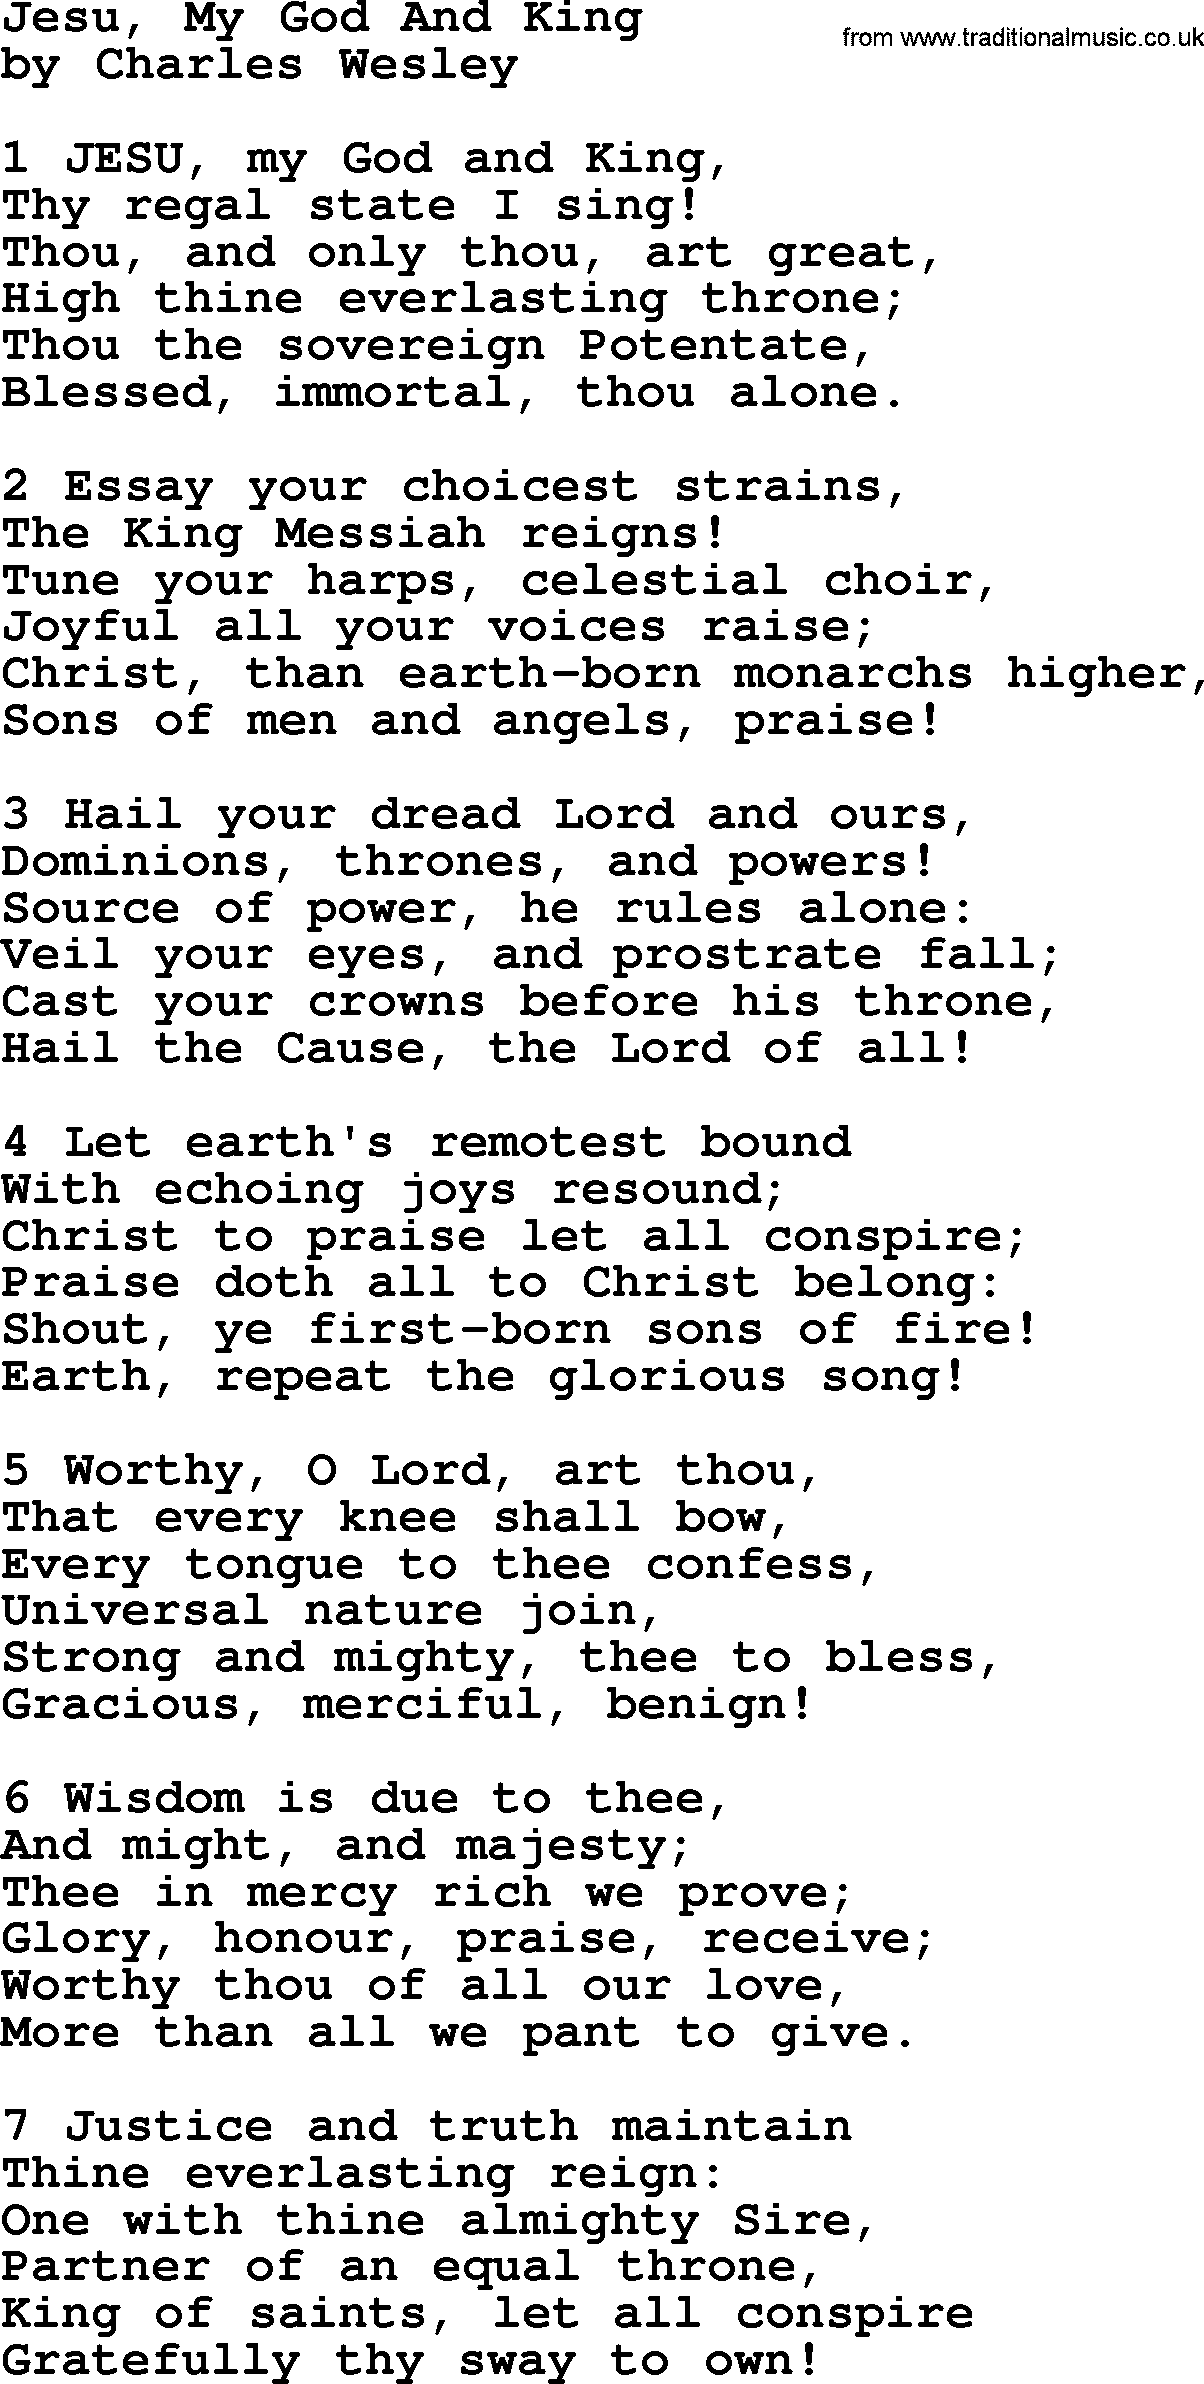 Charles Wesley hymn: Jesu, My God And King, lyrics